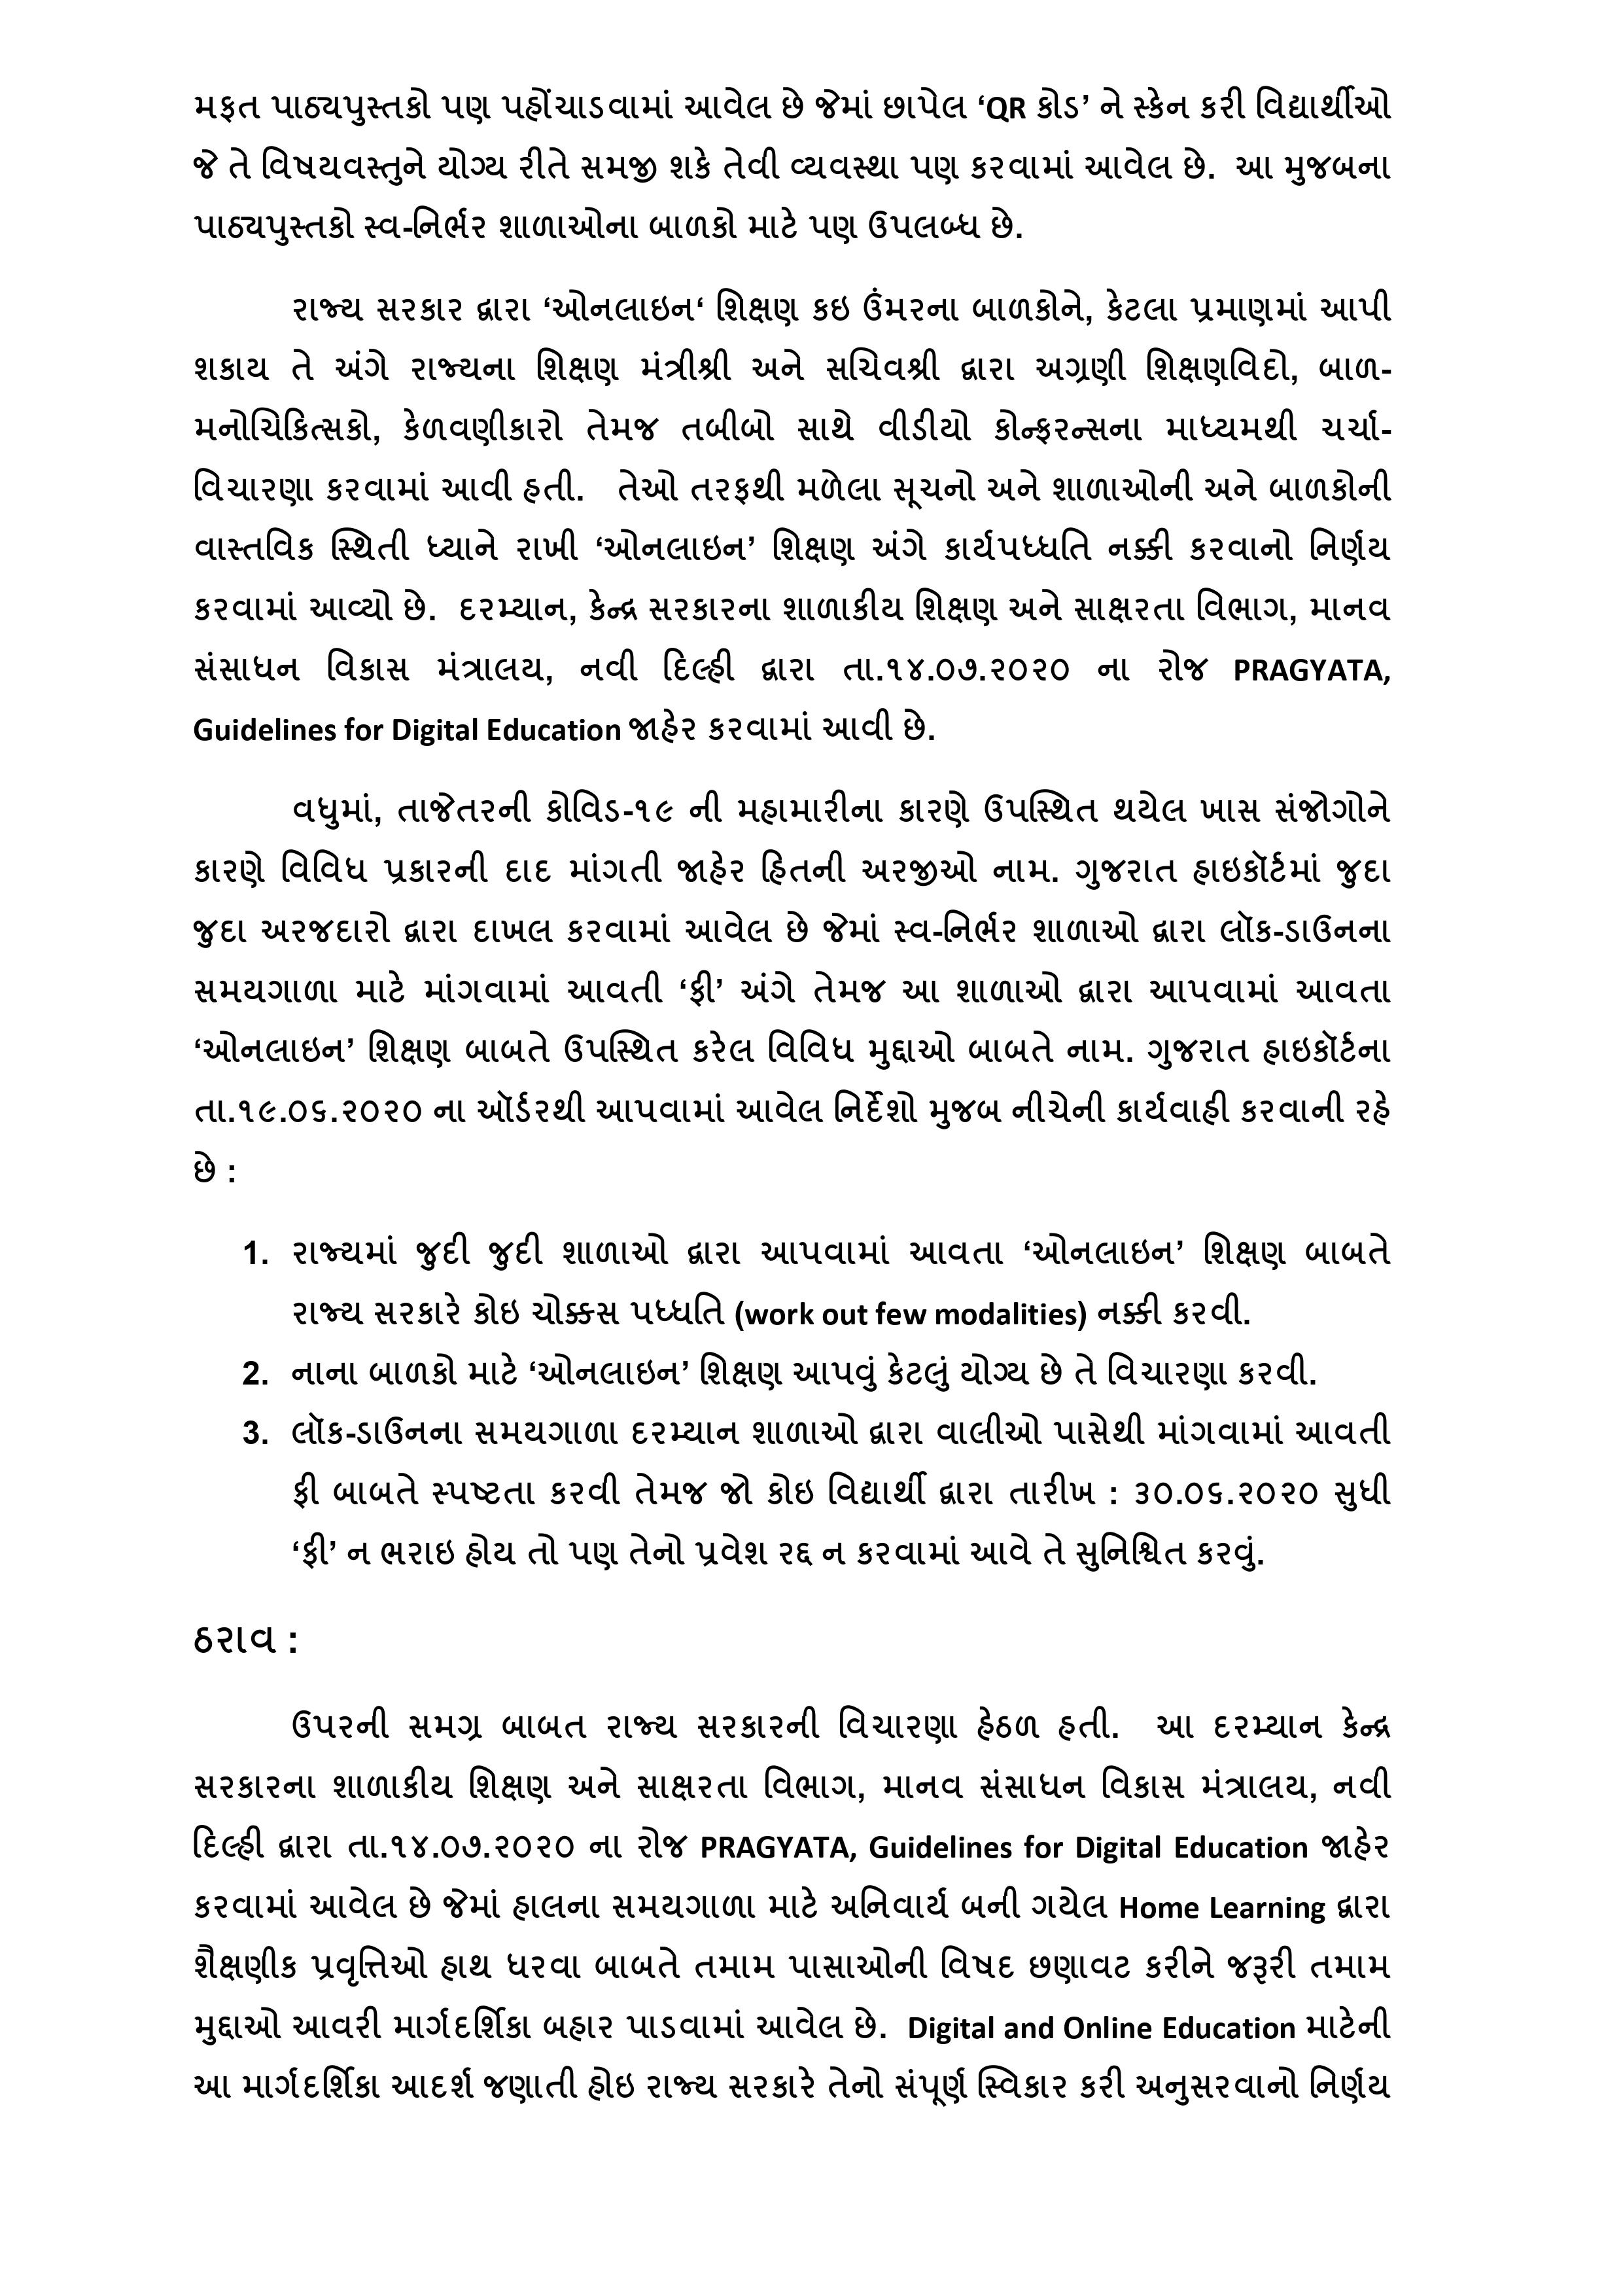 Gujarat Government Circular - No Fees